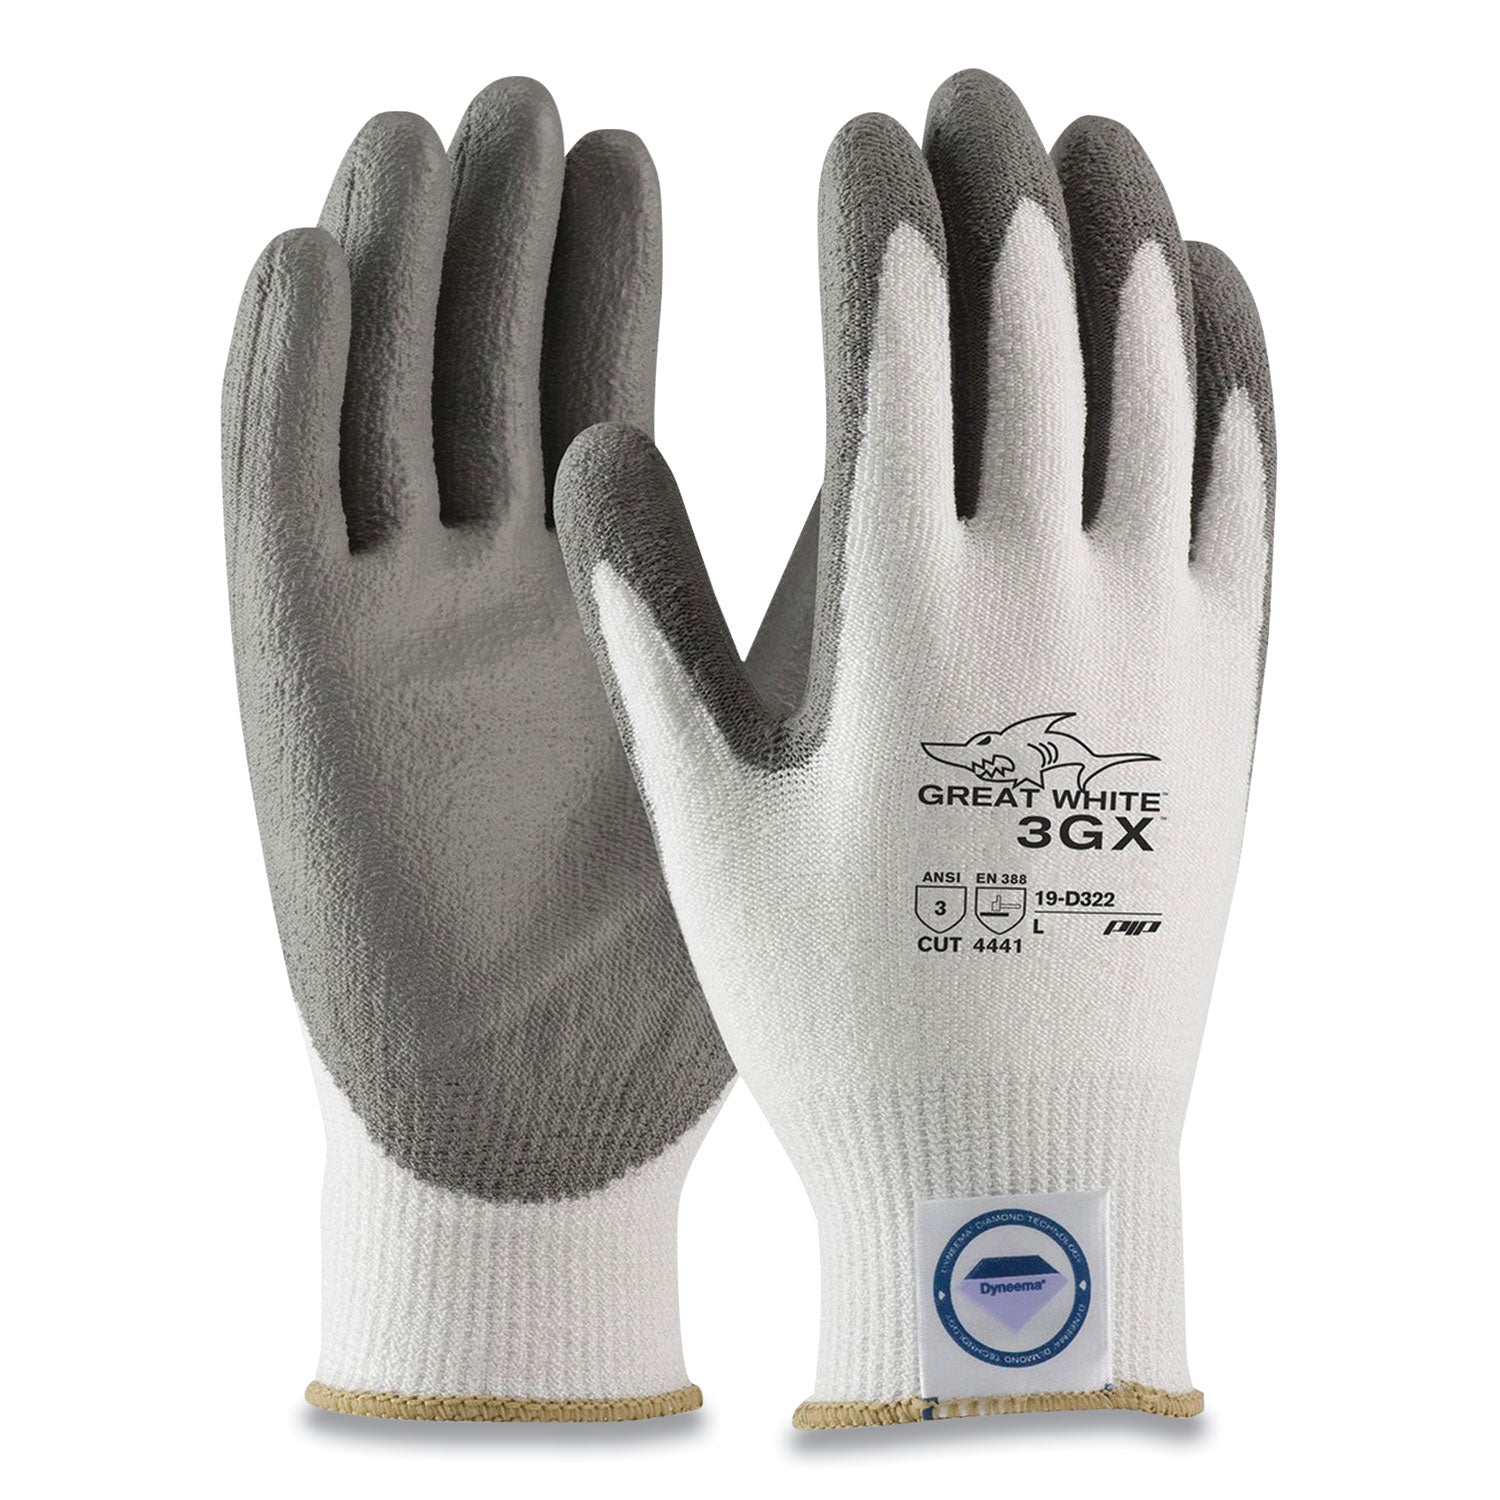 great-white-3gx-seamless-knit-dyneema-diamond-blended-gloves-medium-white-gray_pid19d322m - 2